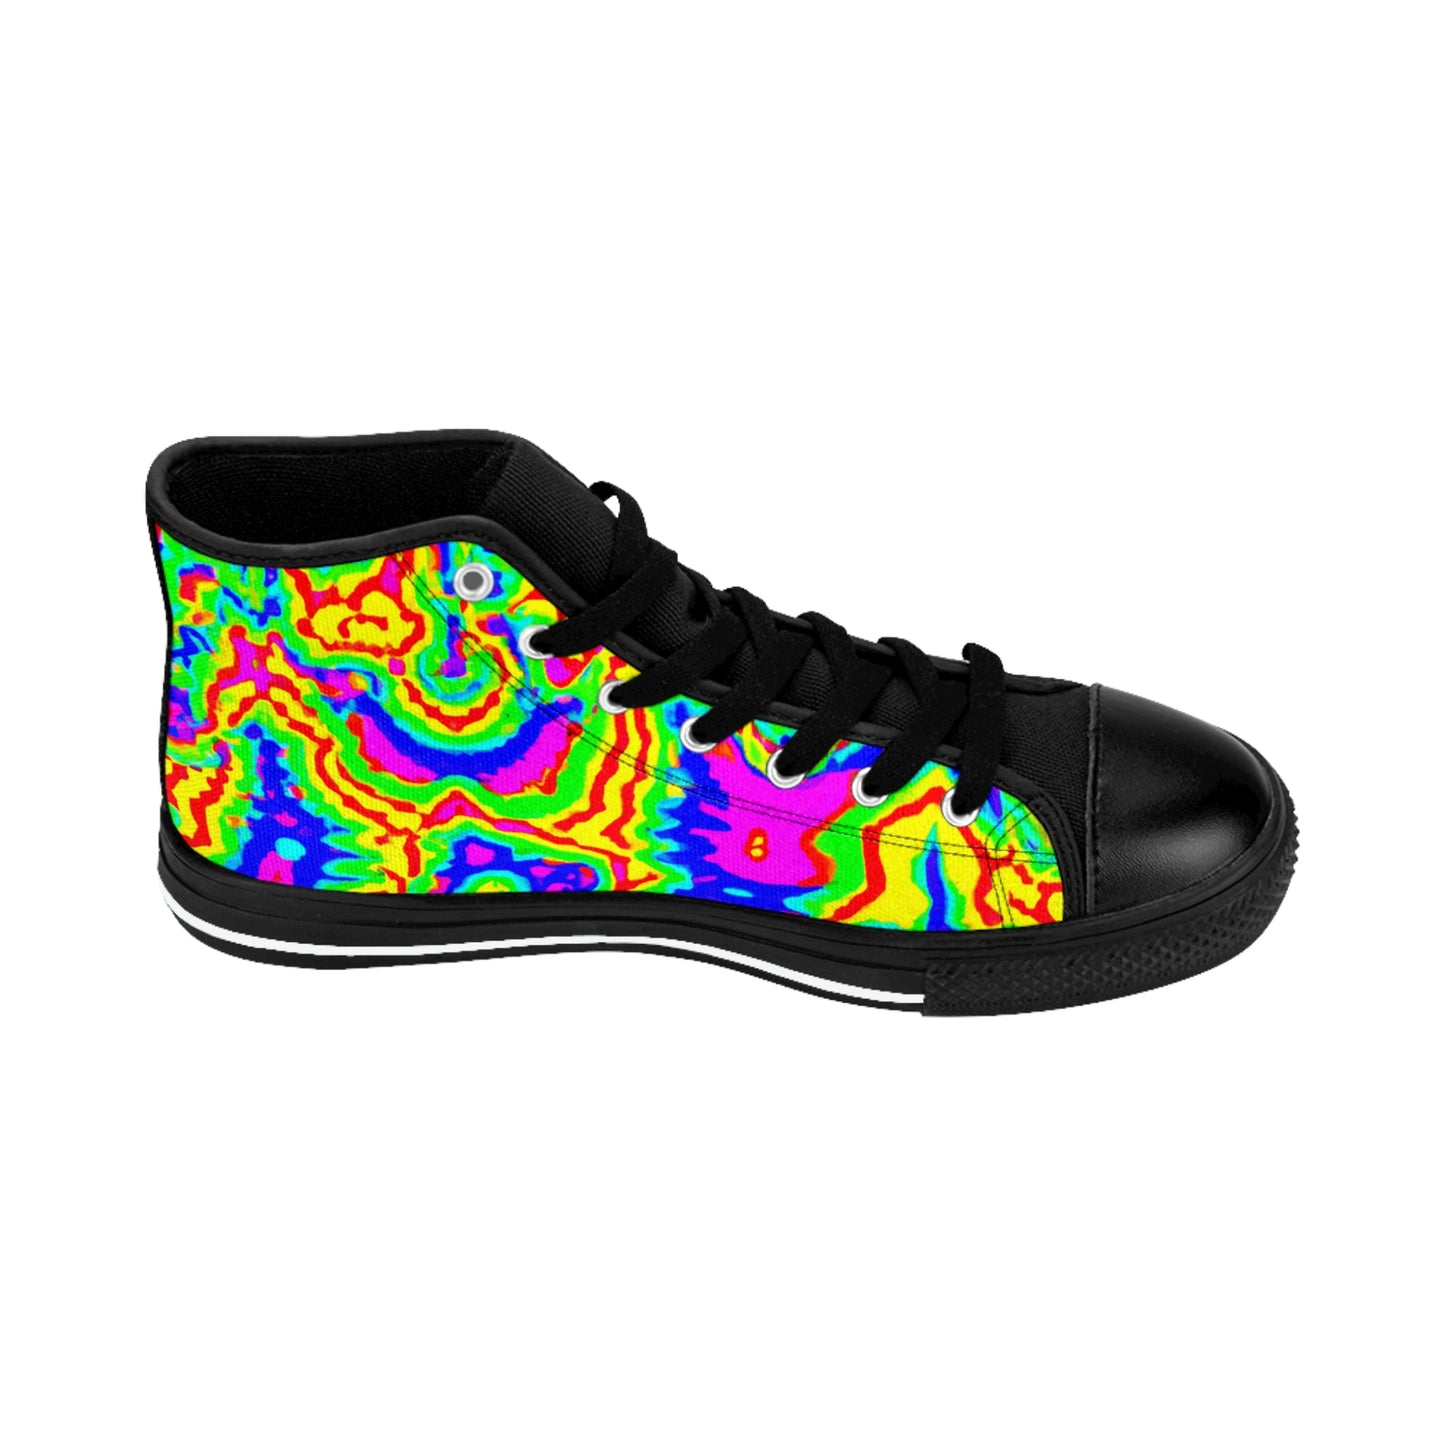 Aldrik the Footwear Maker - Psychedelic Hi Tops